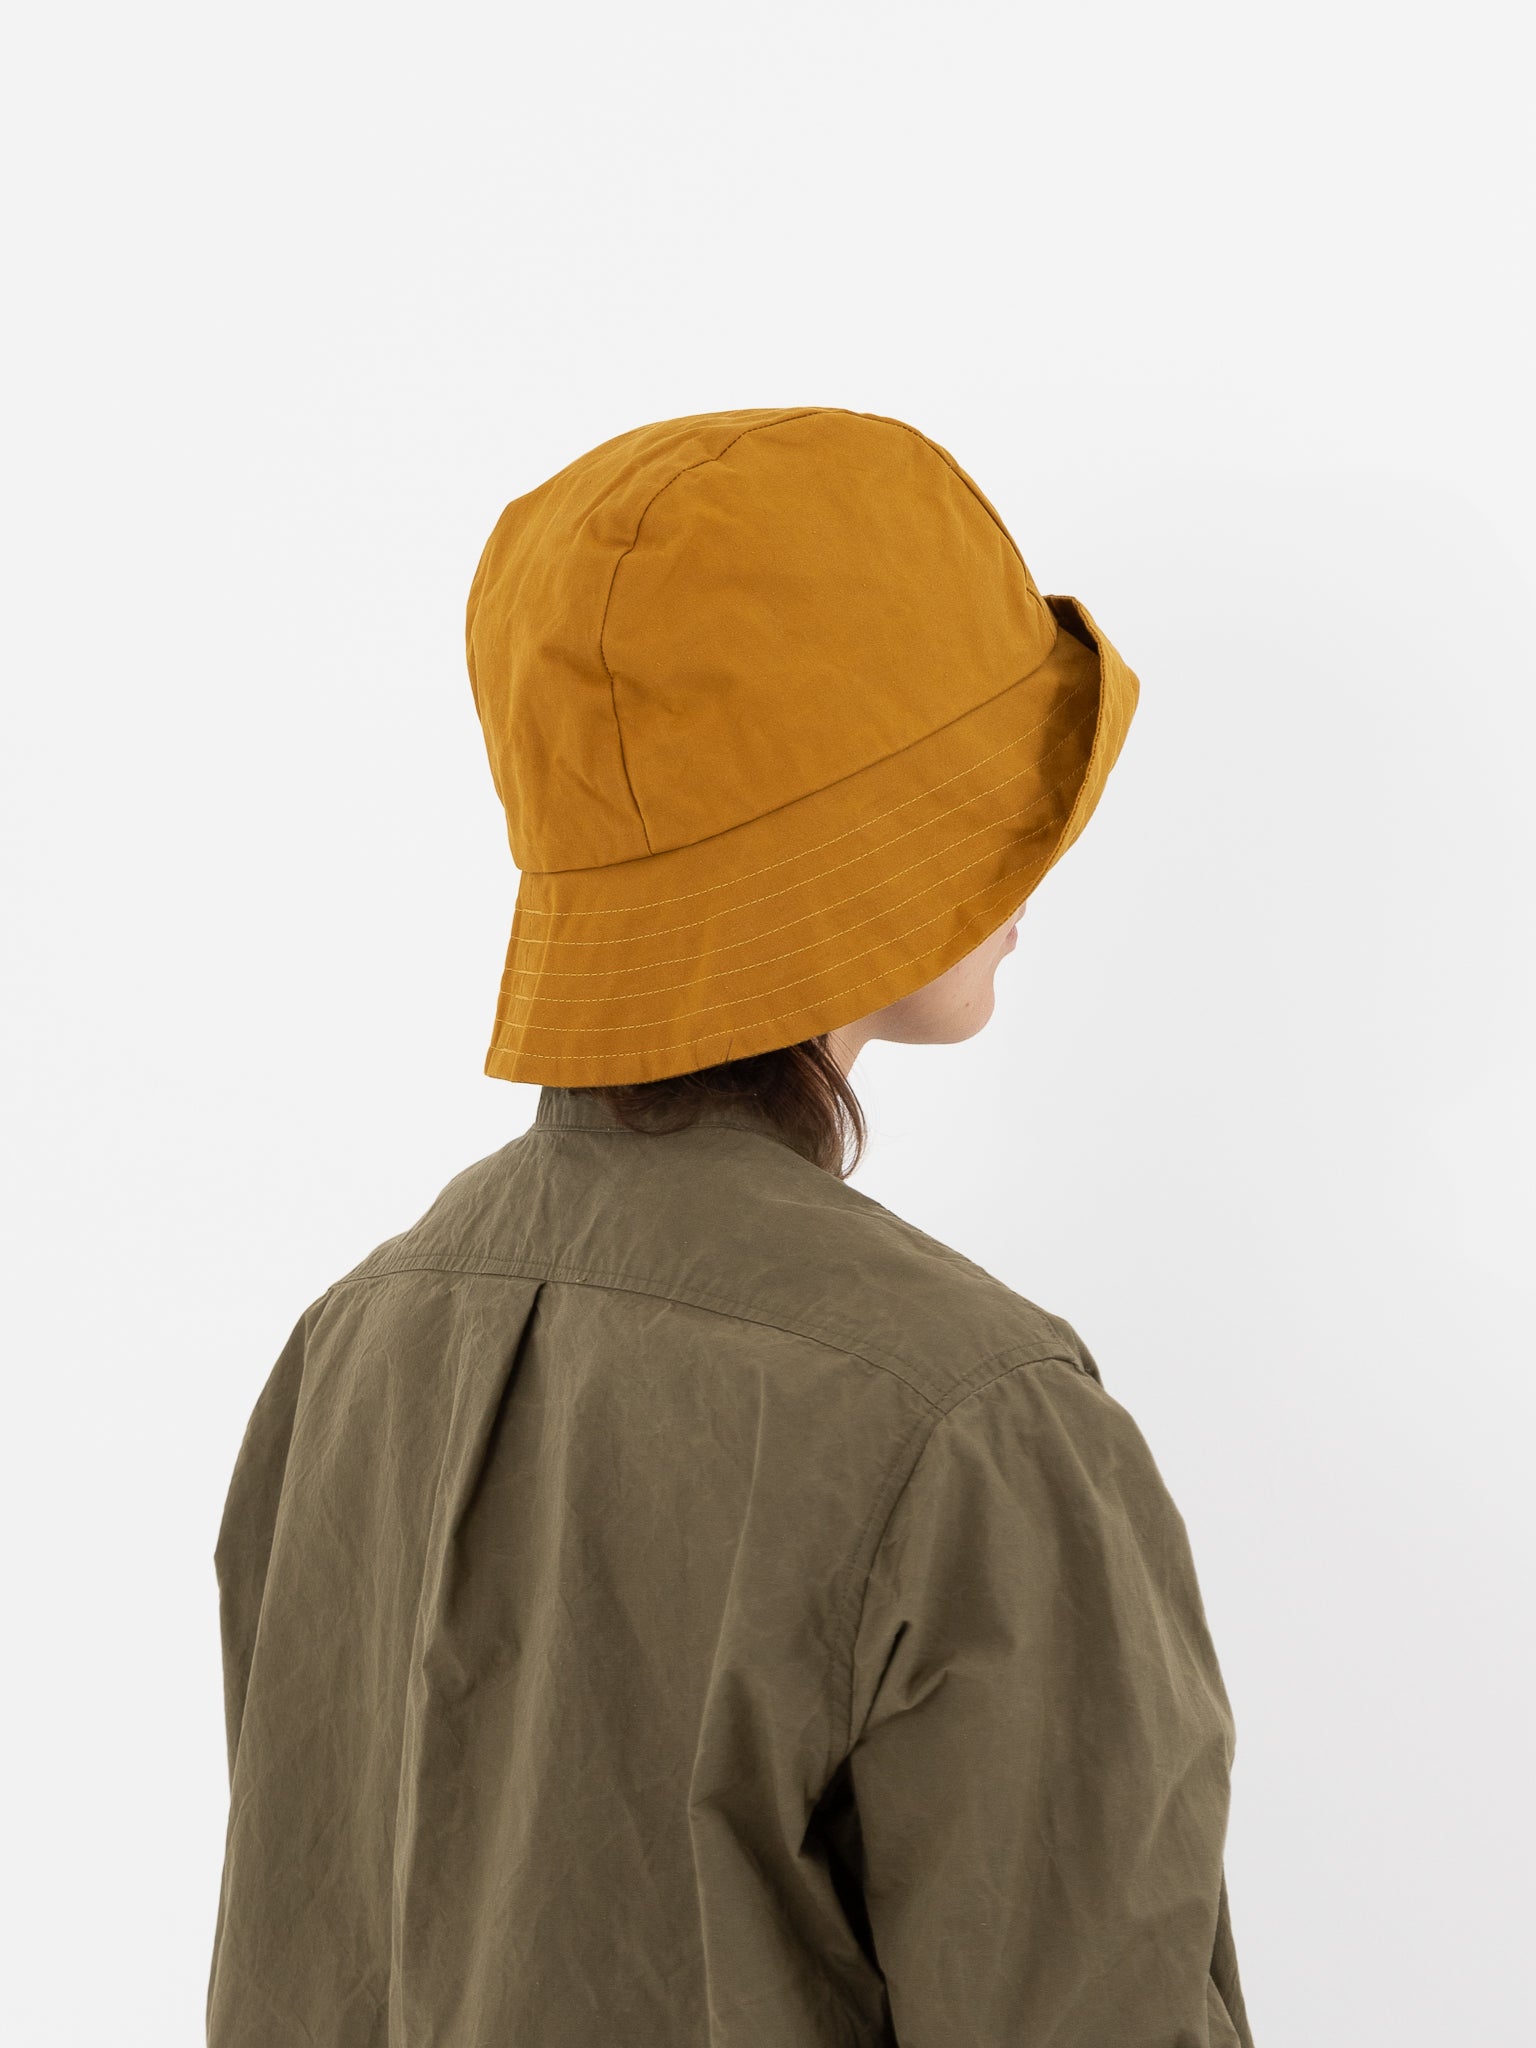 Studio Kettle Fisherman Hat, Mustard - Worthwhile